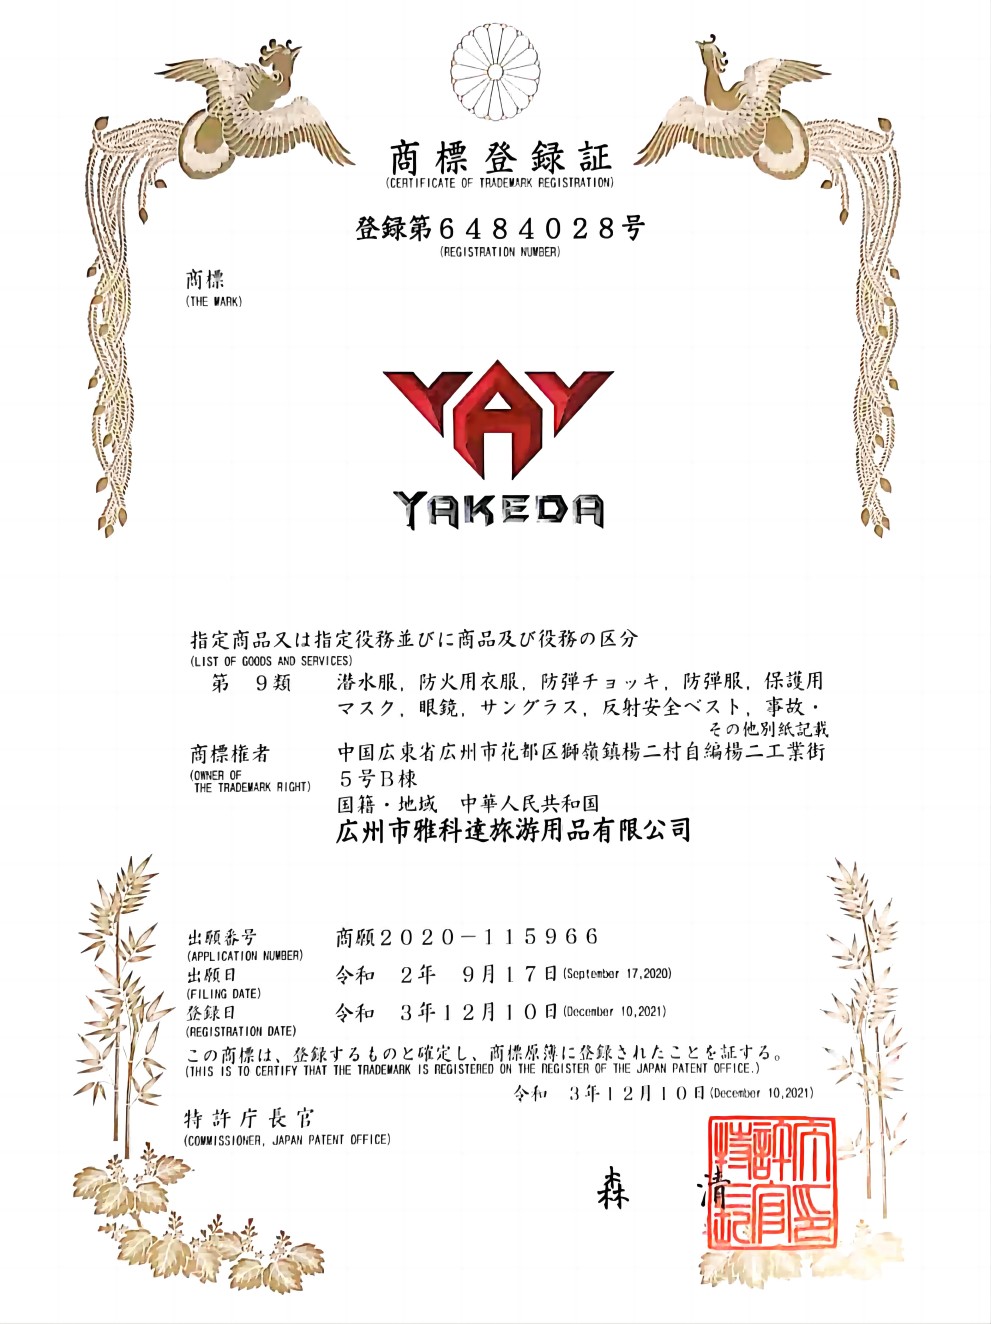 Japan Trademark Certificate